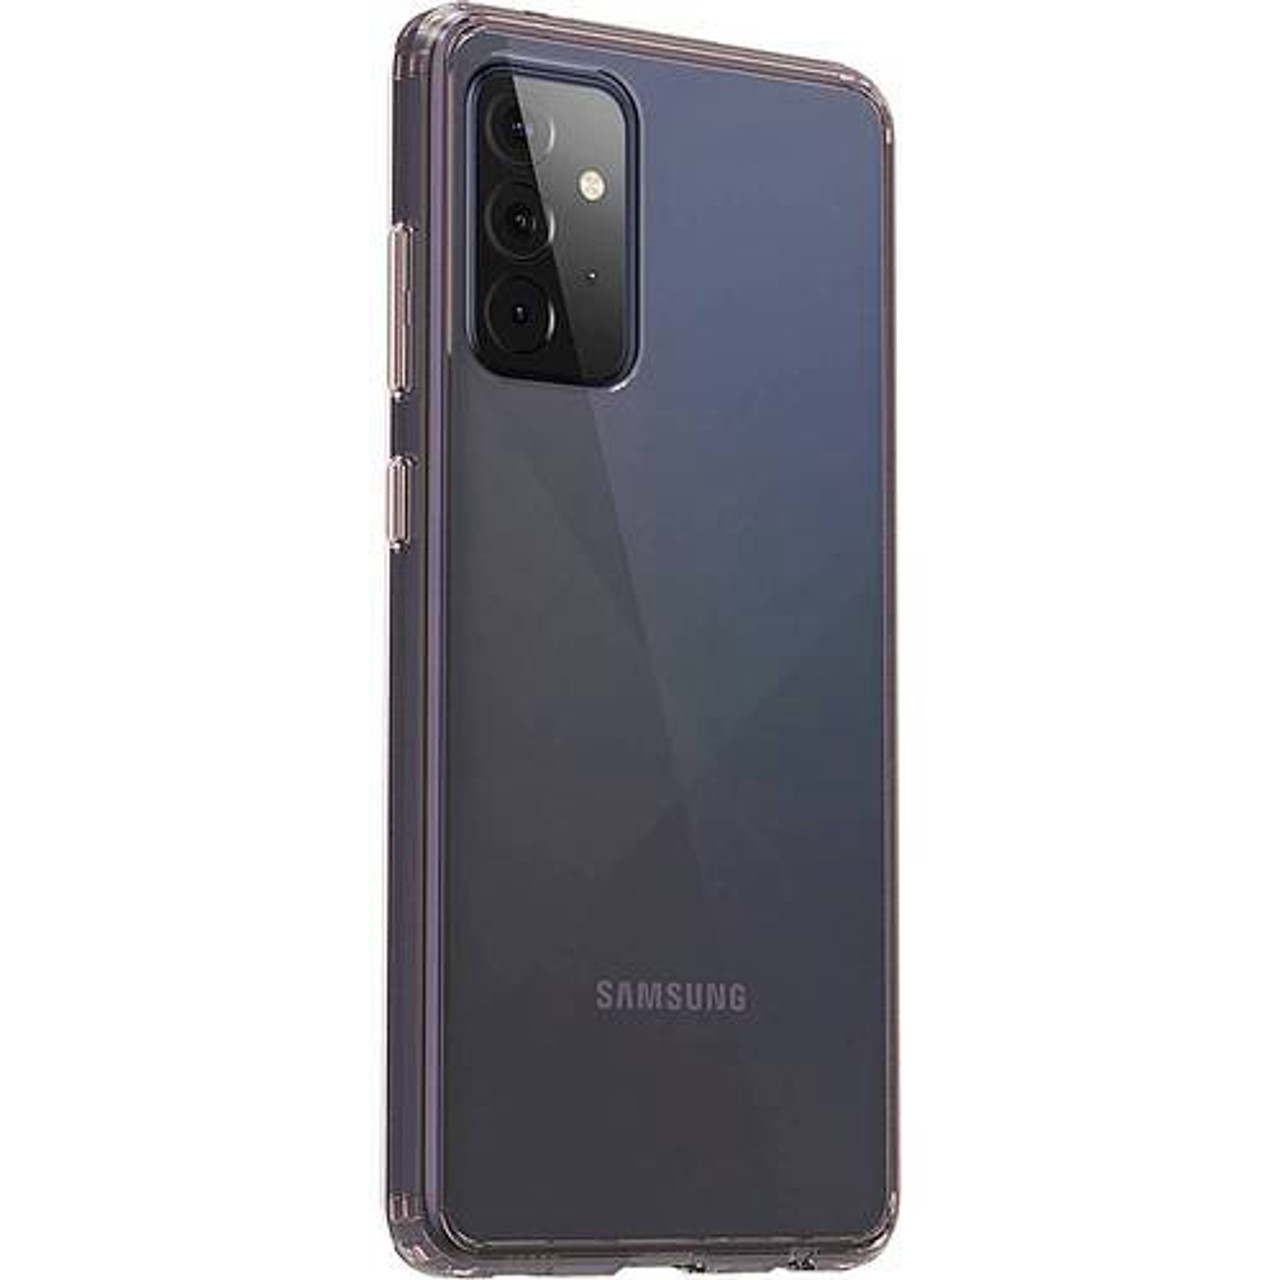 SaharaCase - Hard Shell Series Case for Samsung Galaxy A72 5G - Clear Rose Gold